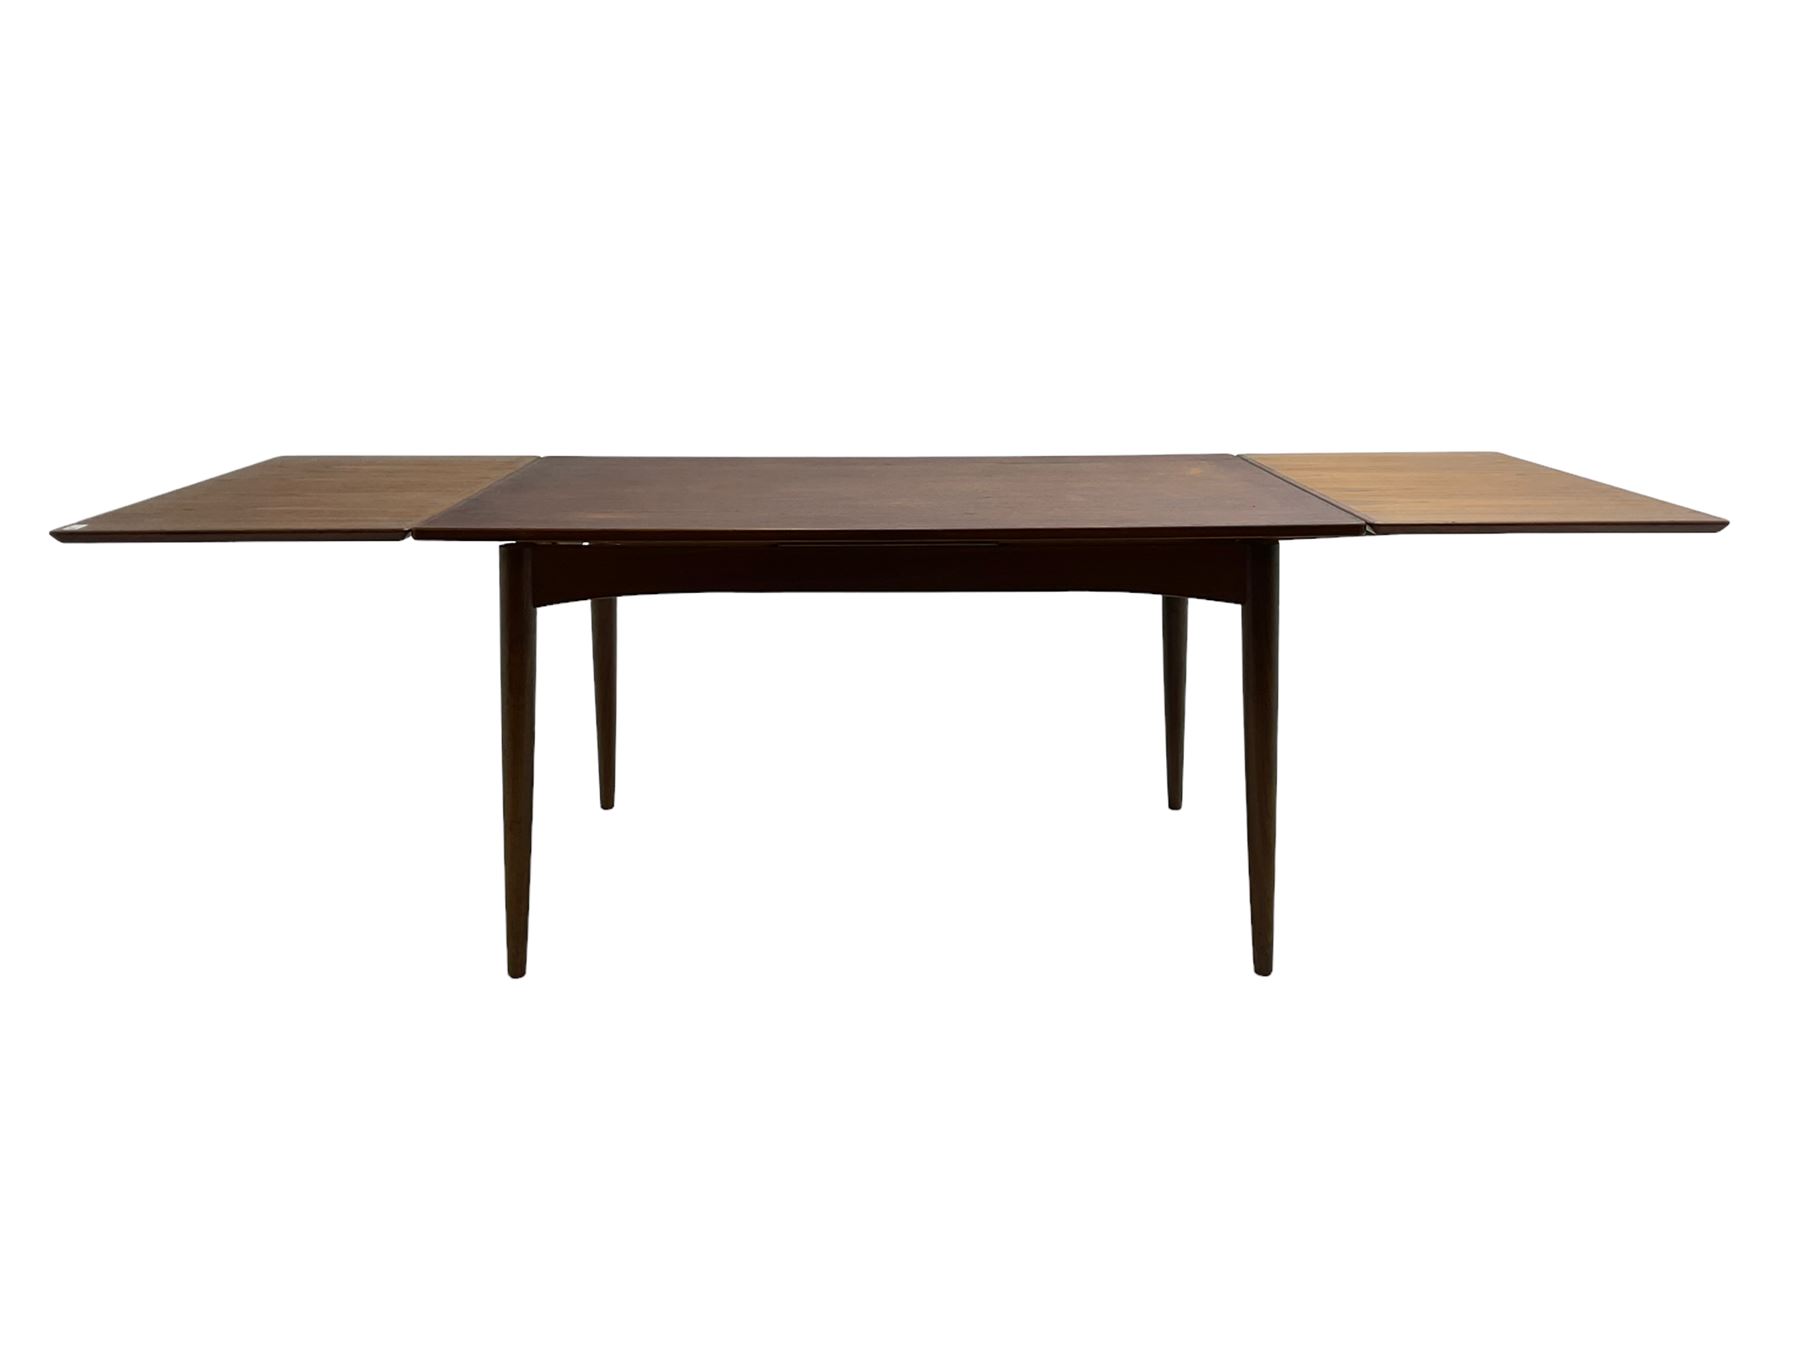 Gudme Mobelfabrik - mid-20th century Danish teak extending dining table